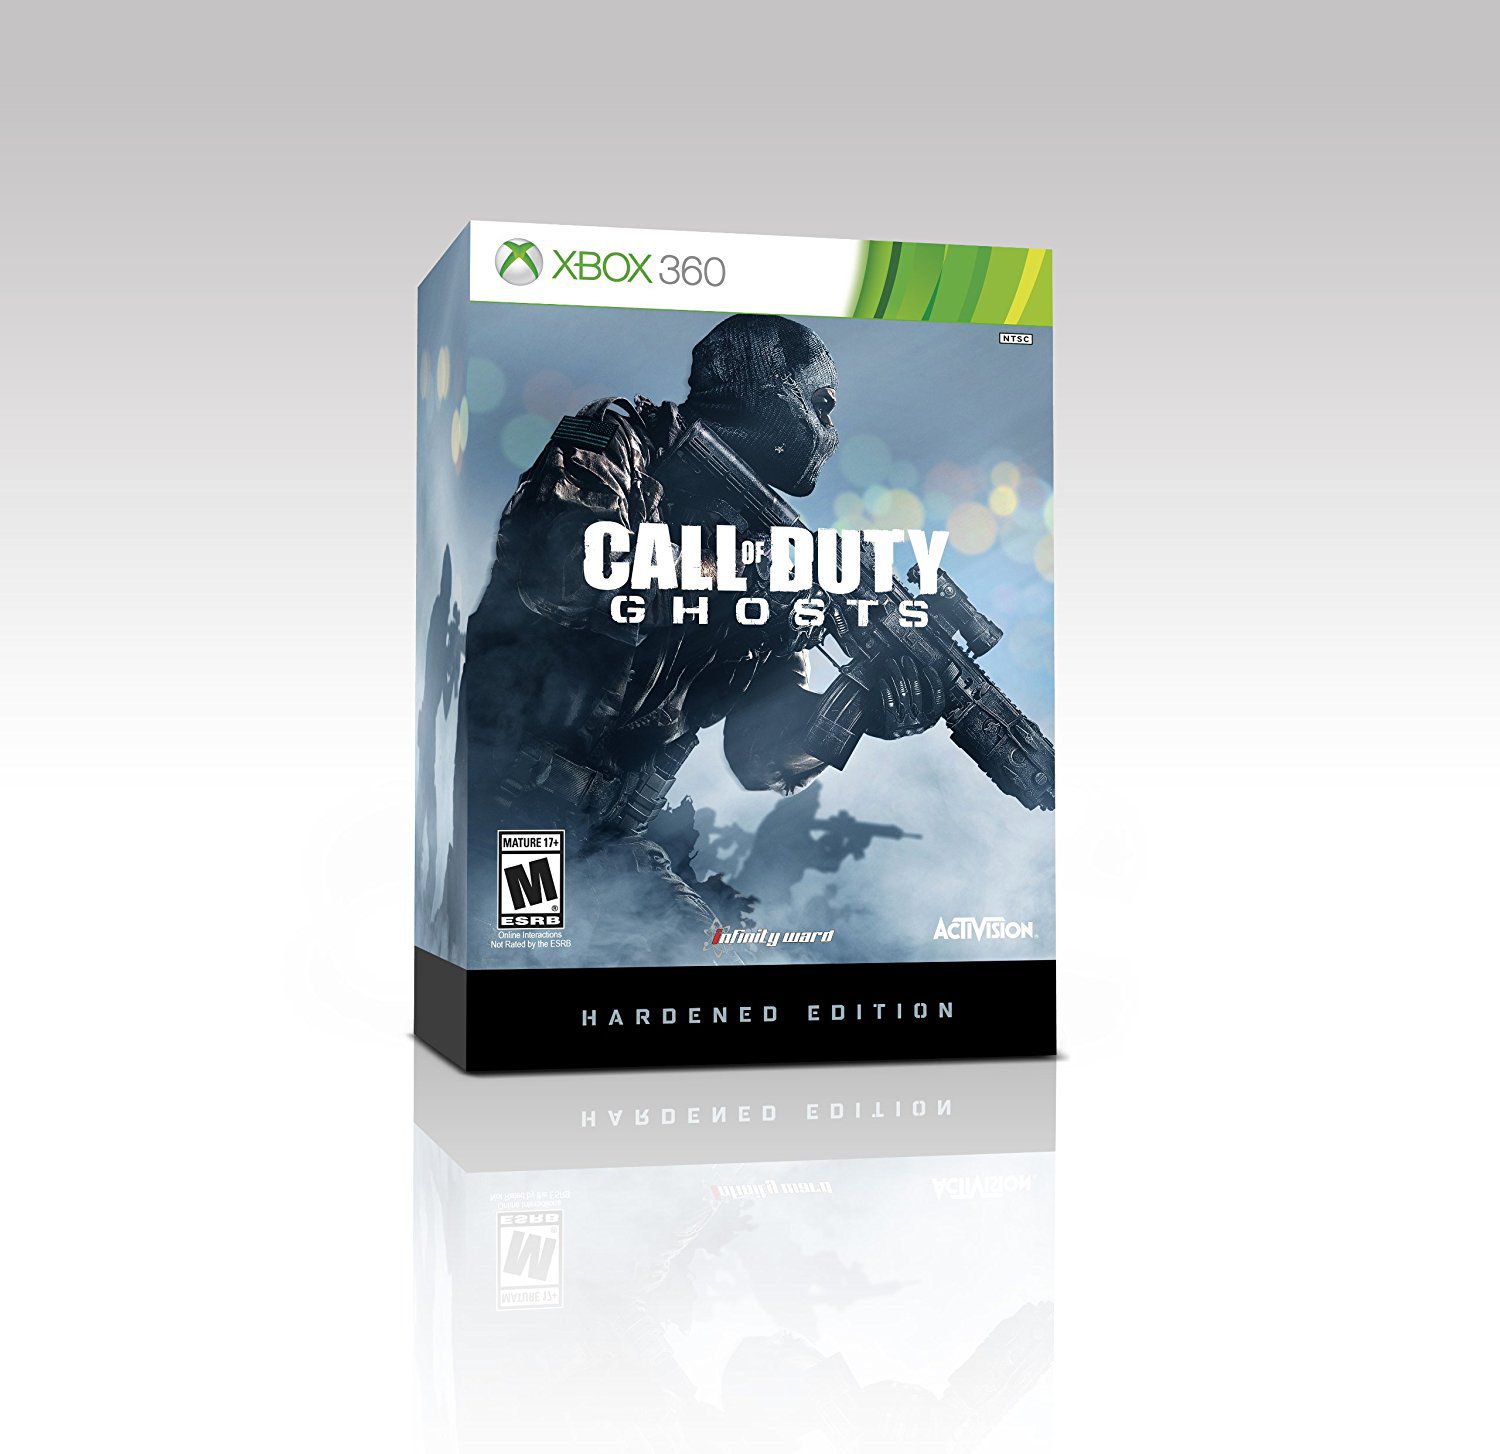 Call of Duty Ghosts Jogos Ps3 PSN Digital Playstation 3